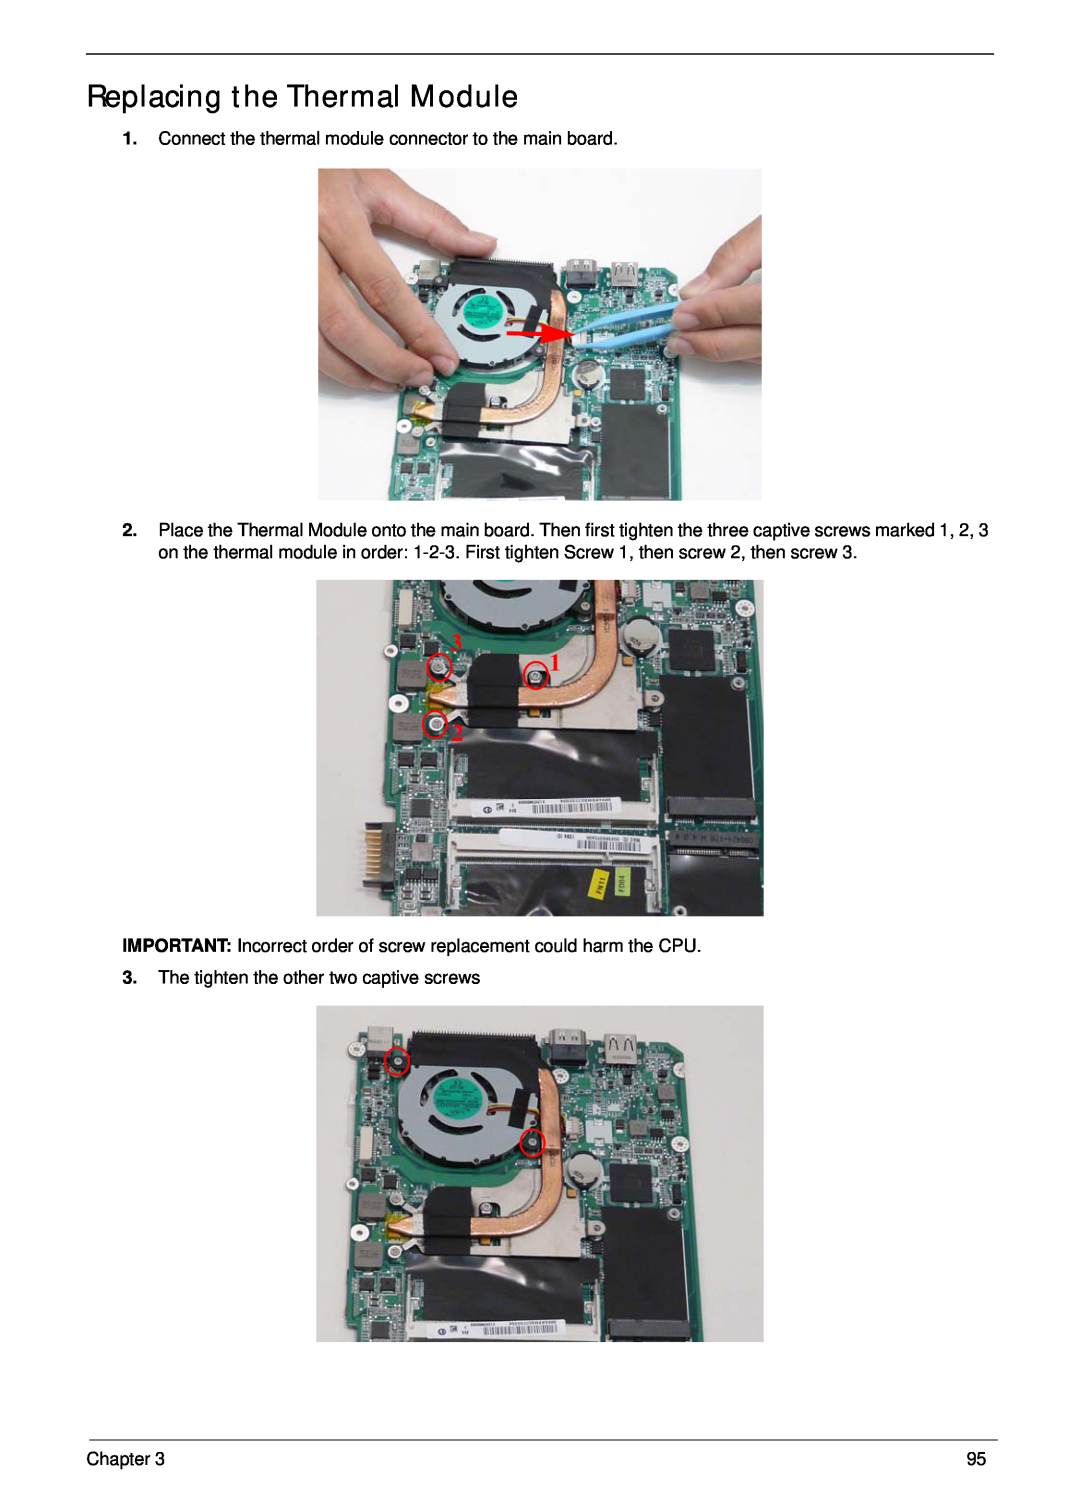 Gateway EC14 manual Replacing the Thermal Module, Connect the thermal module connector to the main board, Chapter 